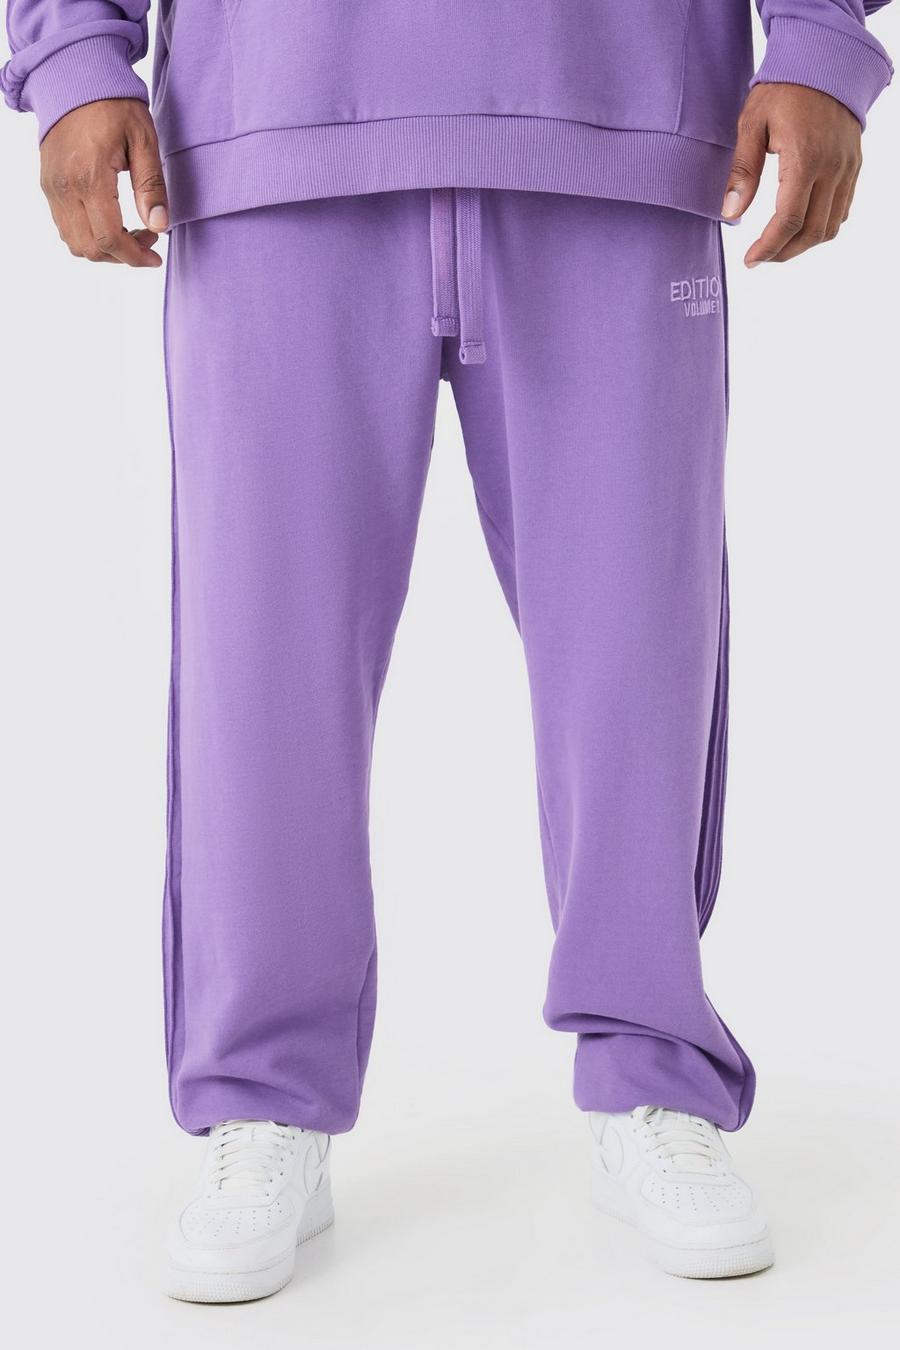 Pantalón deportivo Plus oversize grueso con alforza EDITION, Purple